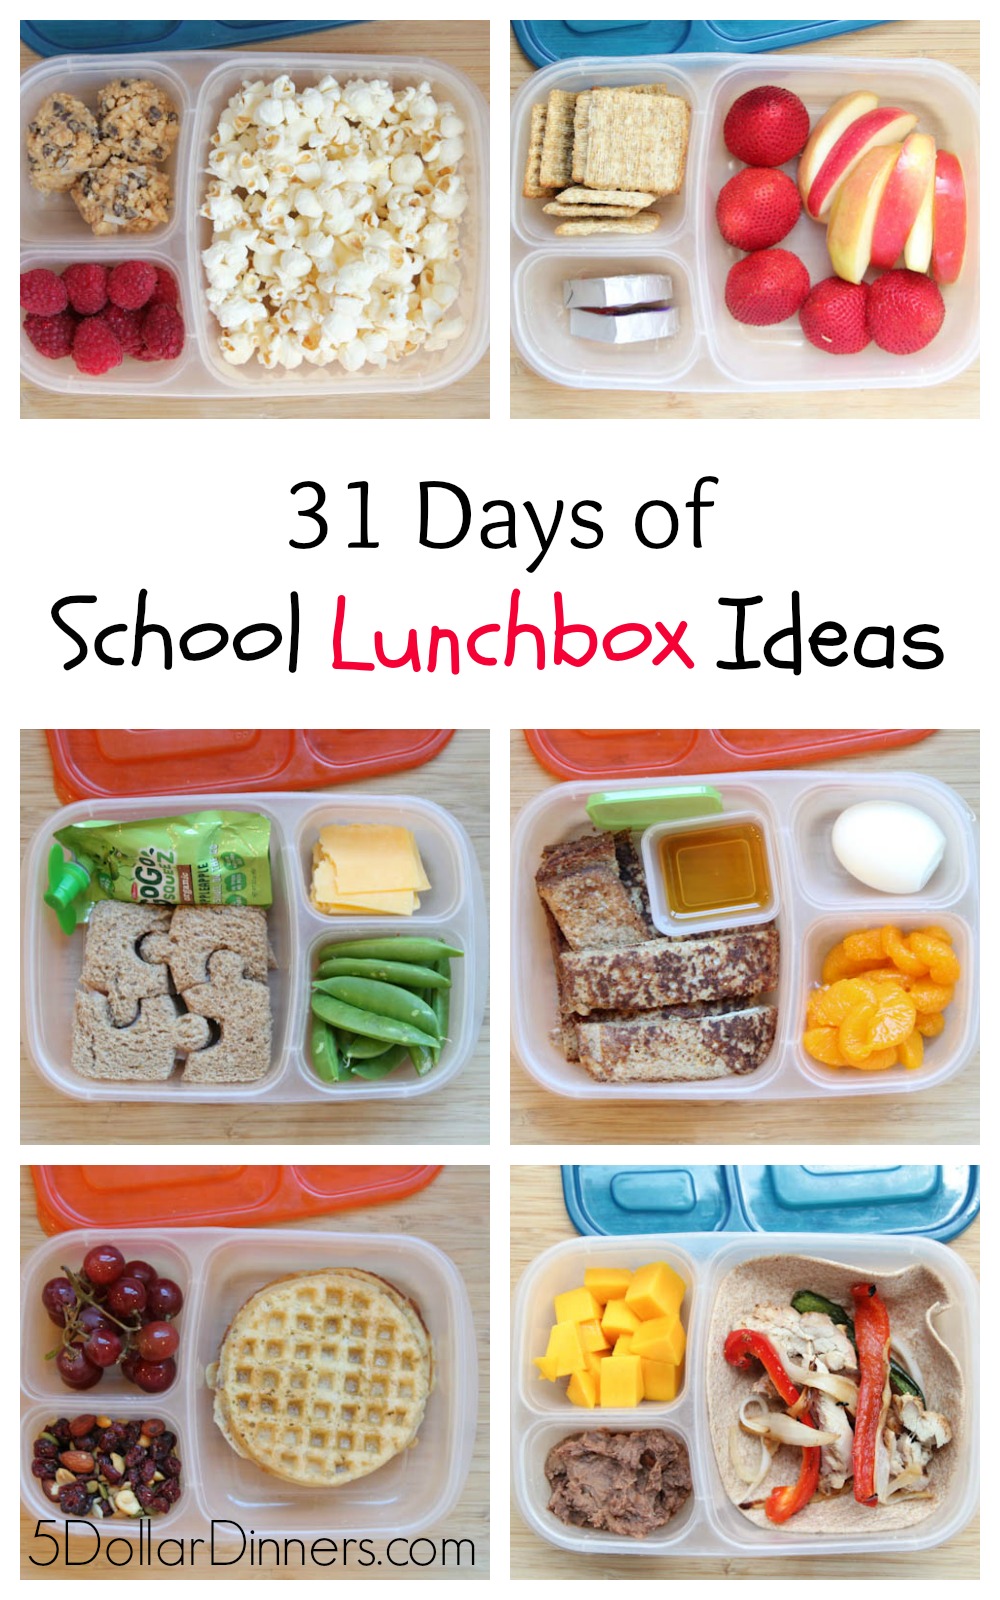 https://www.5dollardinners.com/wp-content/uploads/2022/07/31-Days-of-School-Lunchbox-Ideas-PIN.jpeg